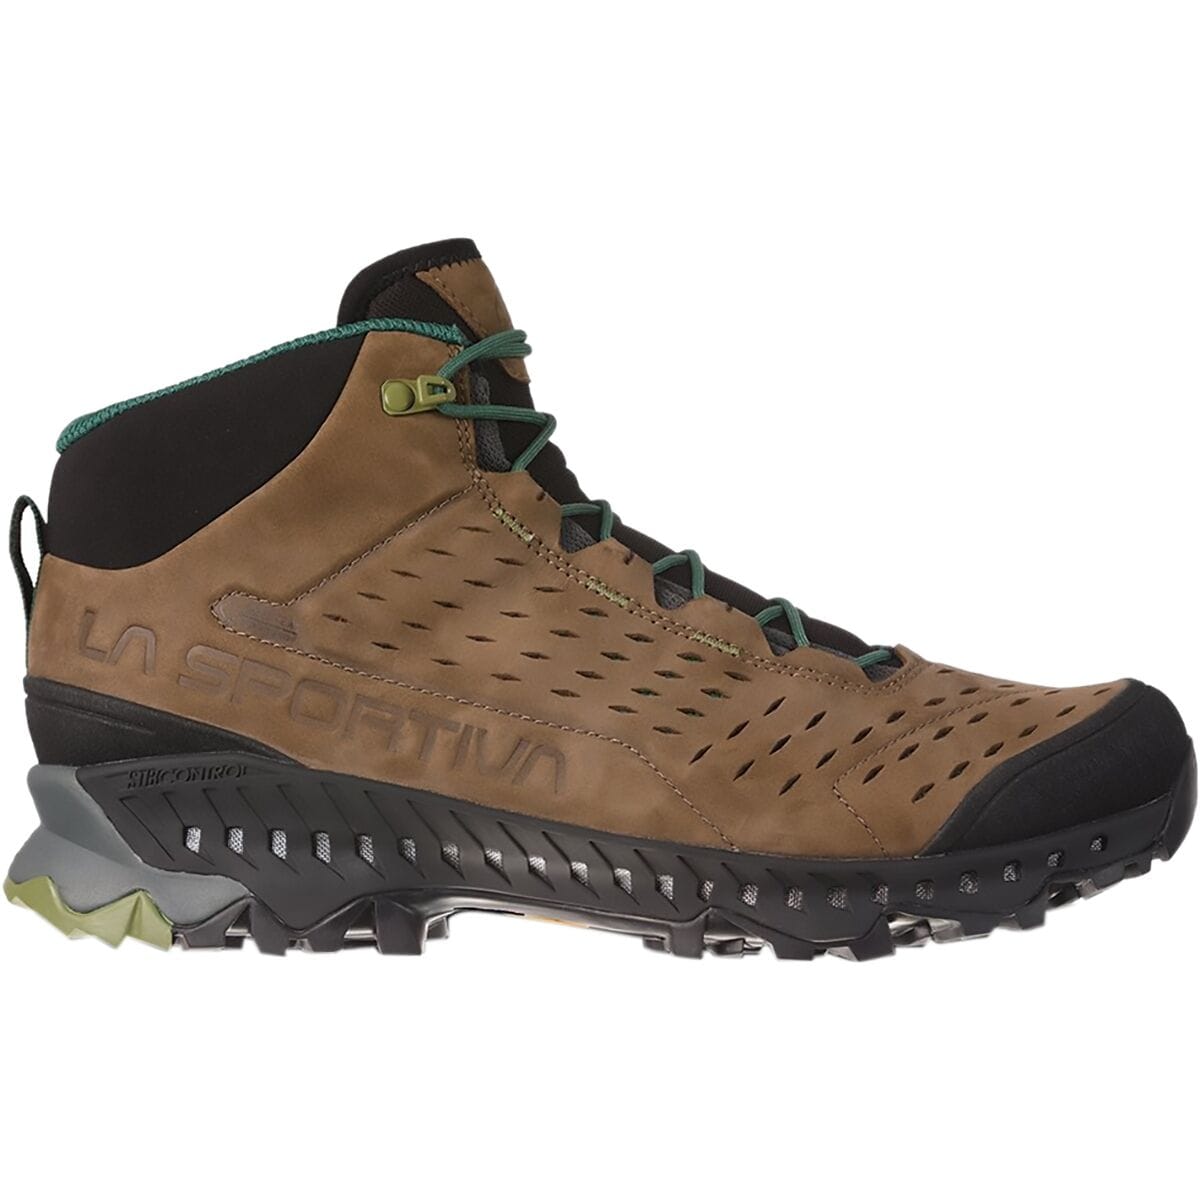 La Sportiva Pyramid GTX Hiking Boot - Men's